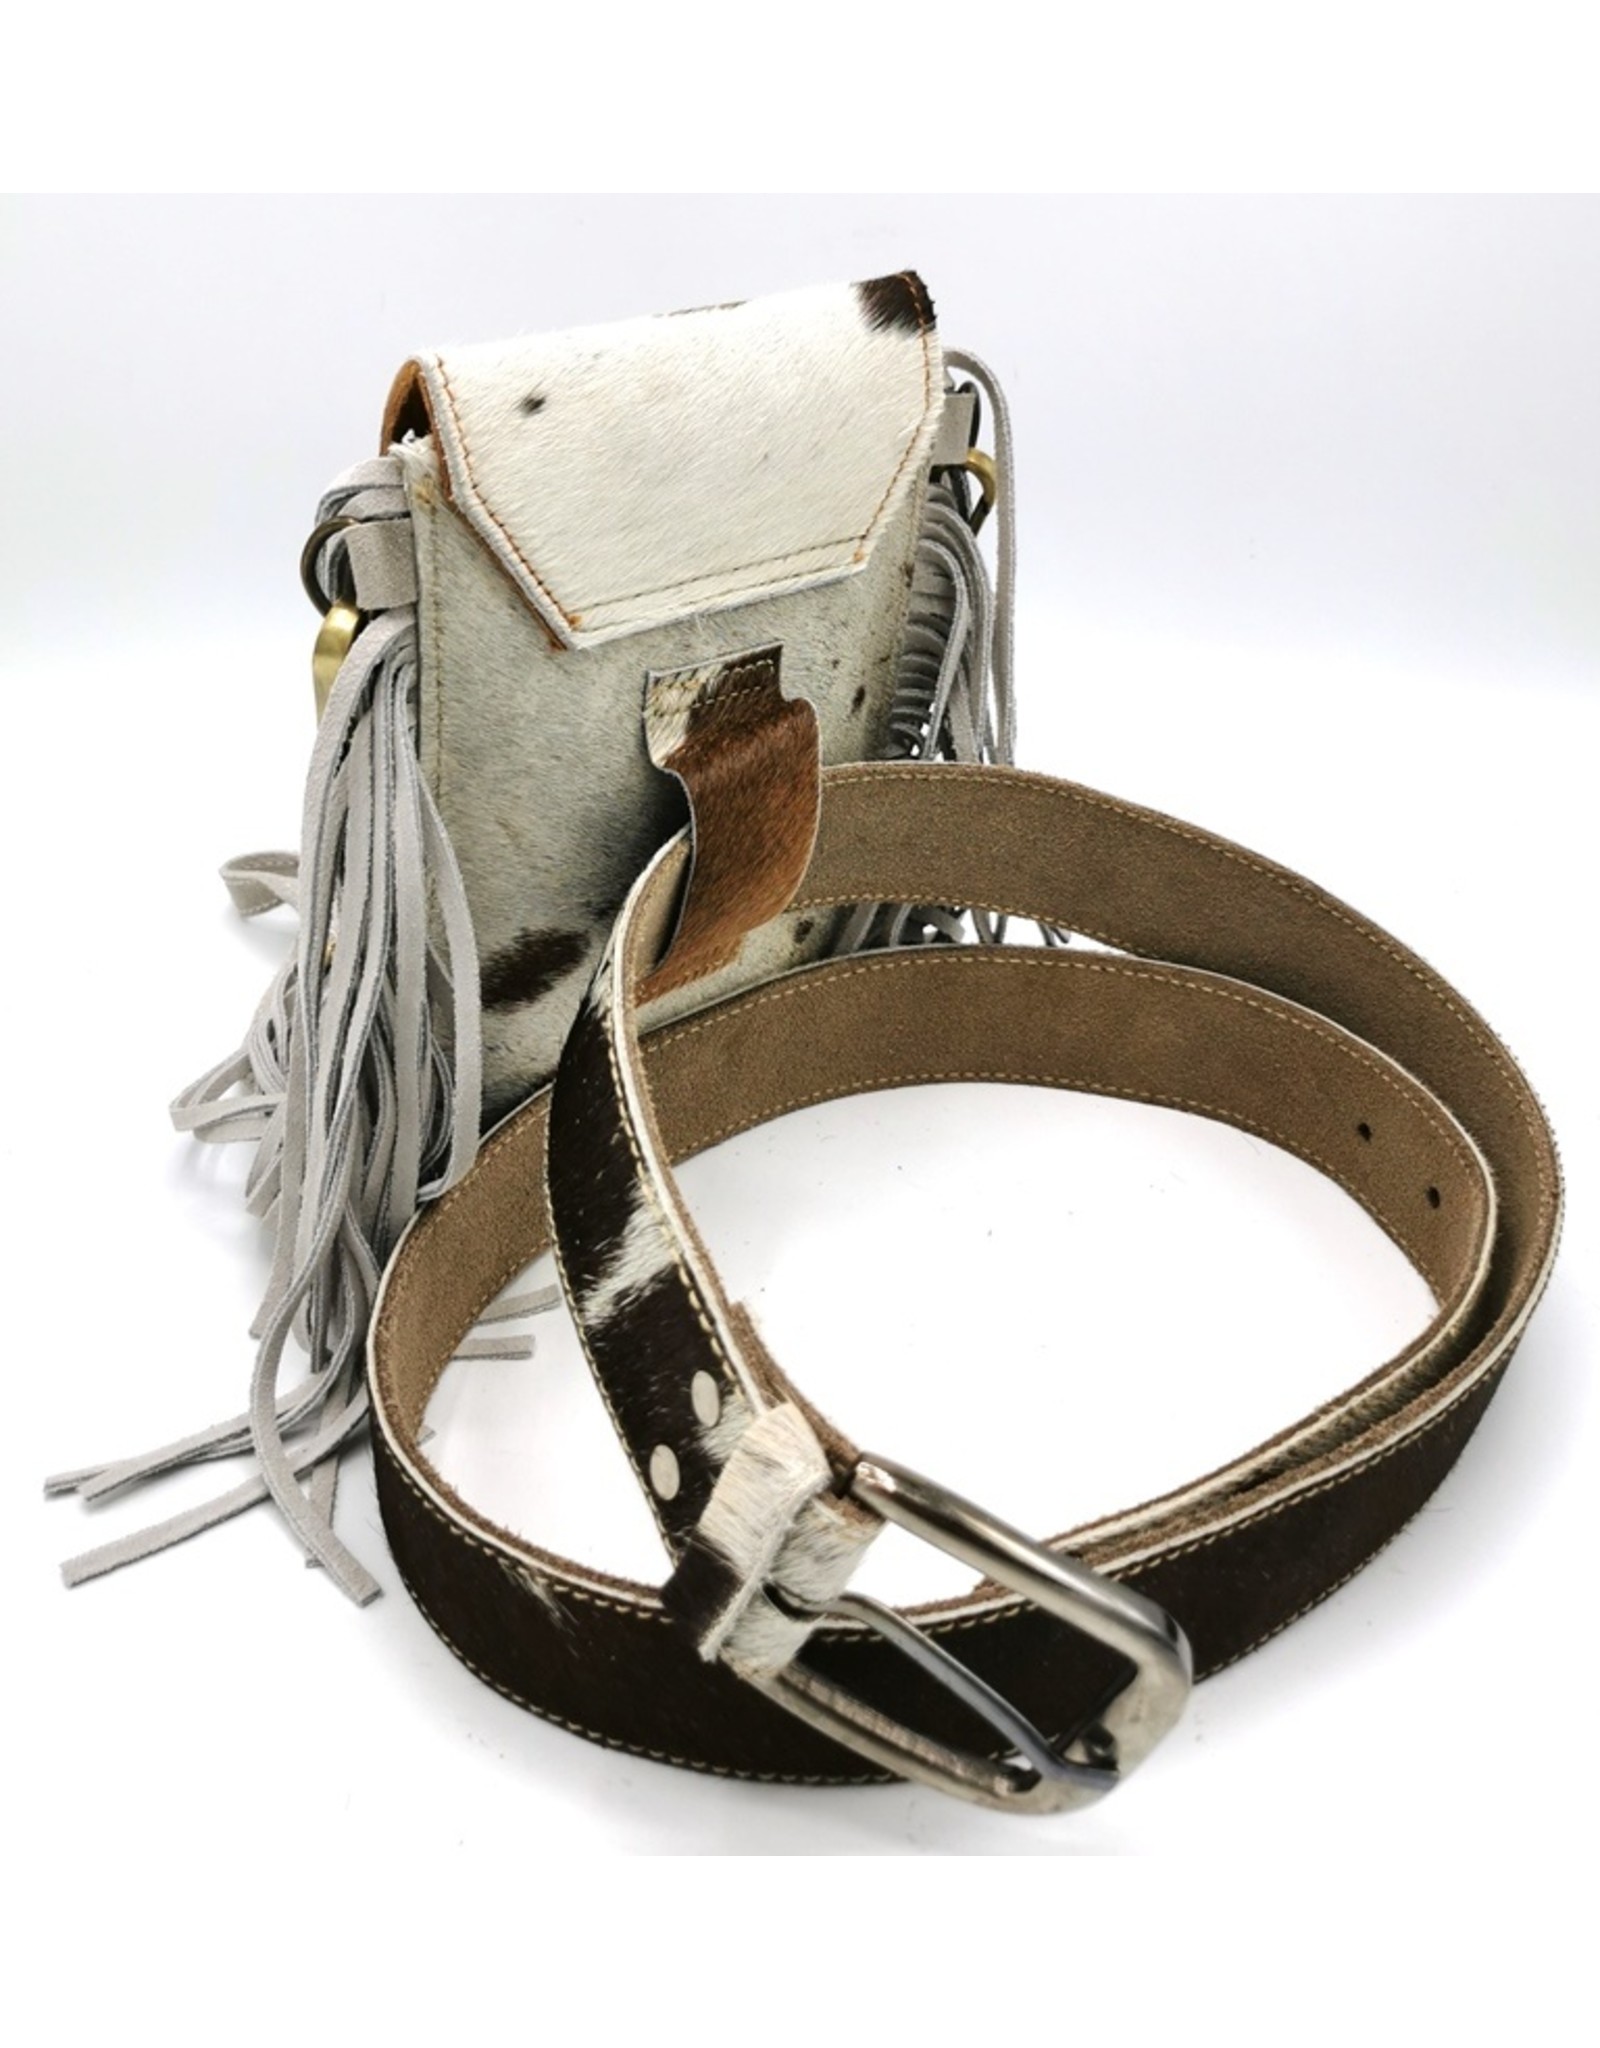 Trukado Leather Festival bags, waist bags and belt bags - Cowhide phone bag-crossbody-belt bag  Ibiza Style - 2